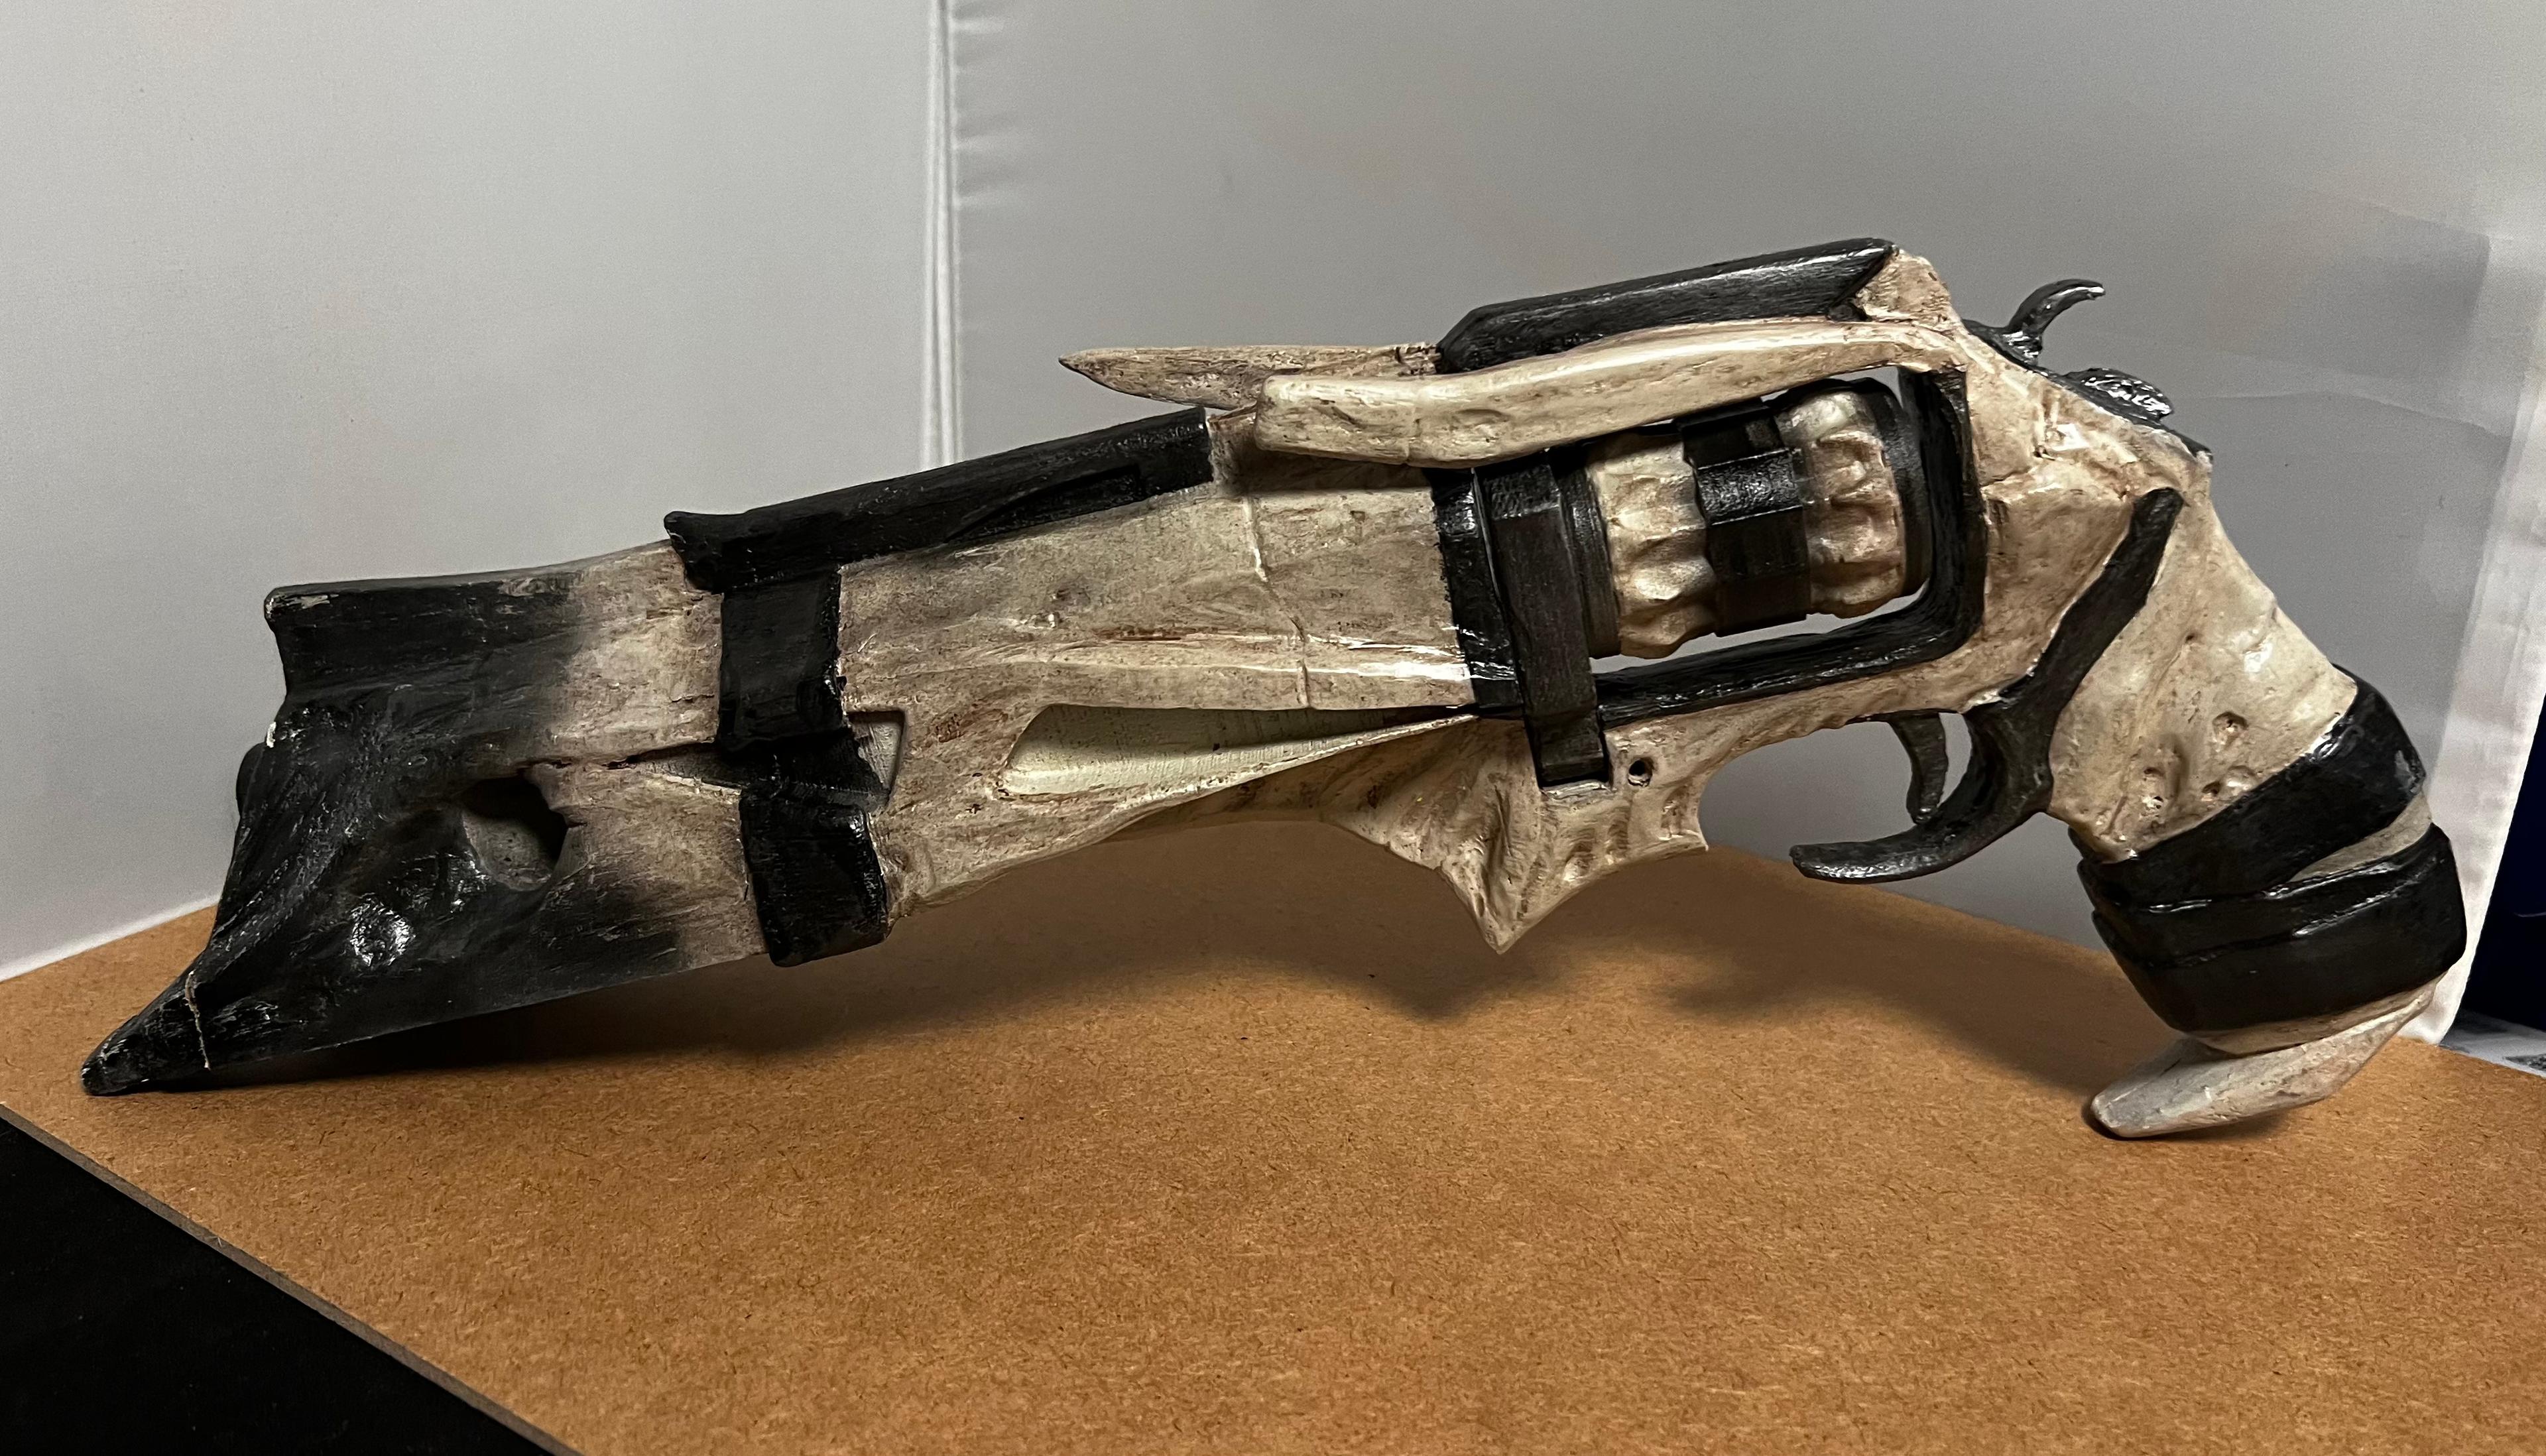 Thorn Wishes of Sorrow Handgun Destiny 2 prop scan 3d model